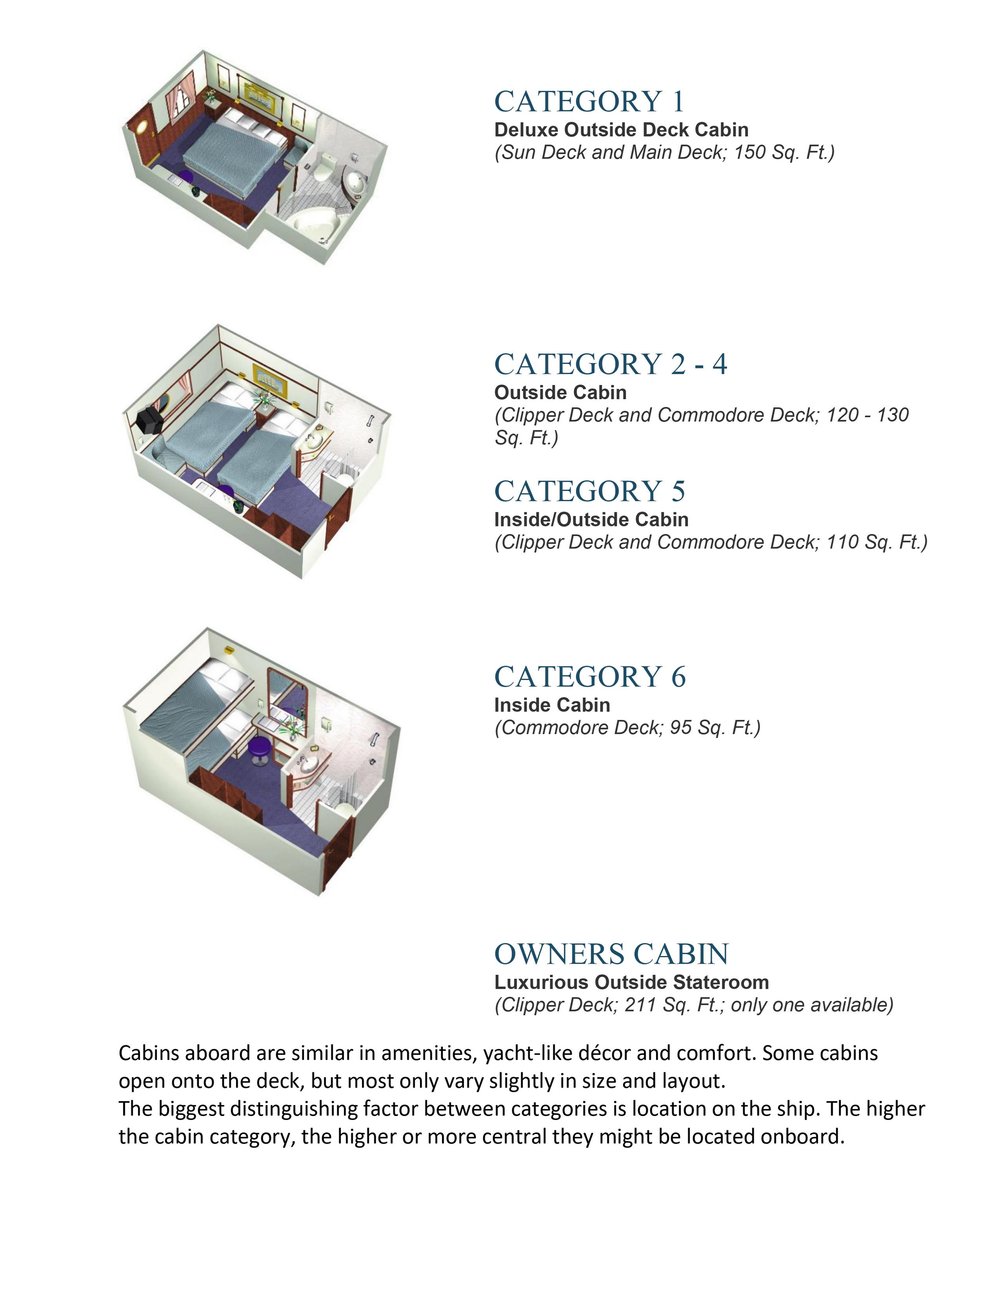 Star Clipper Cabin Categories.jpg